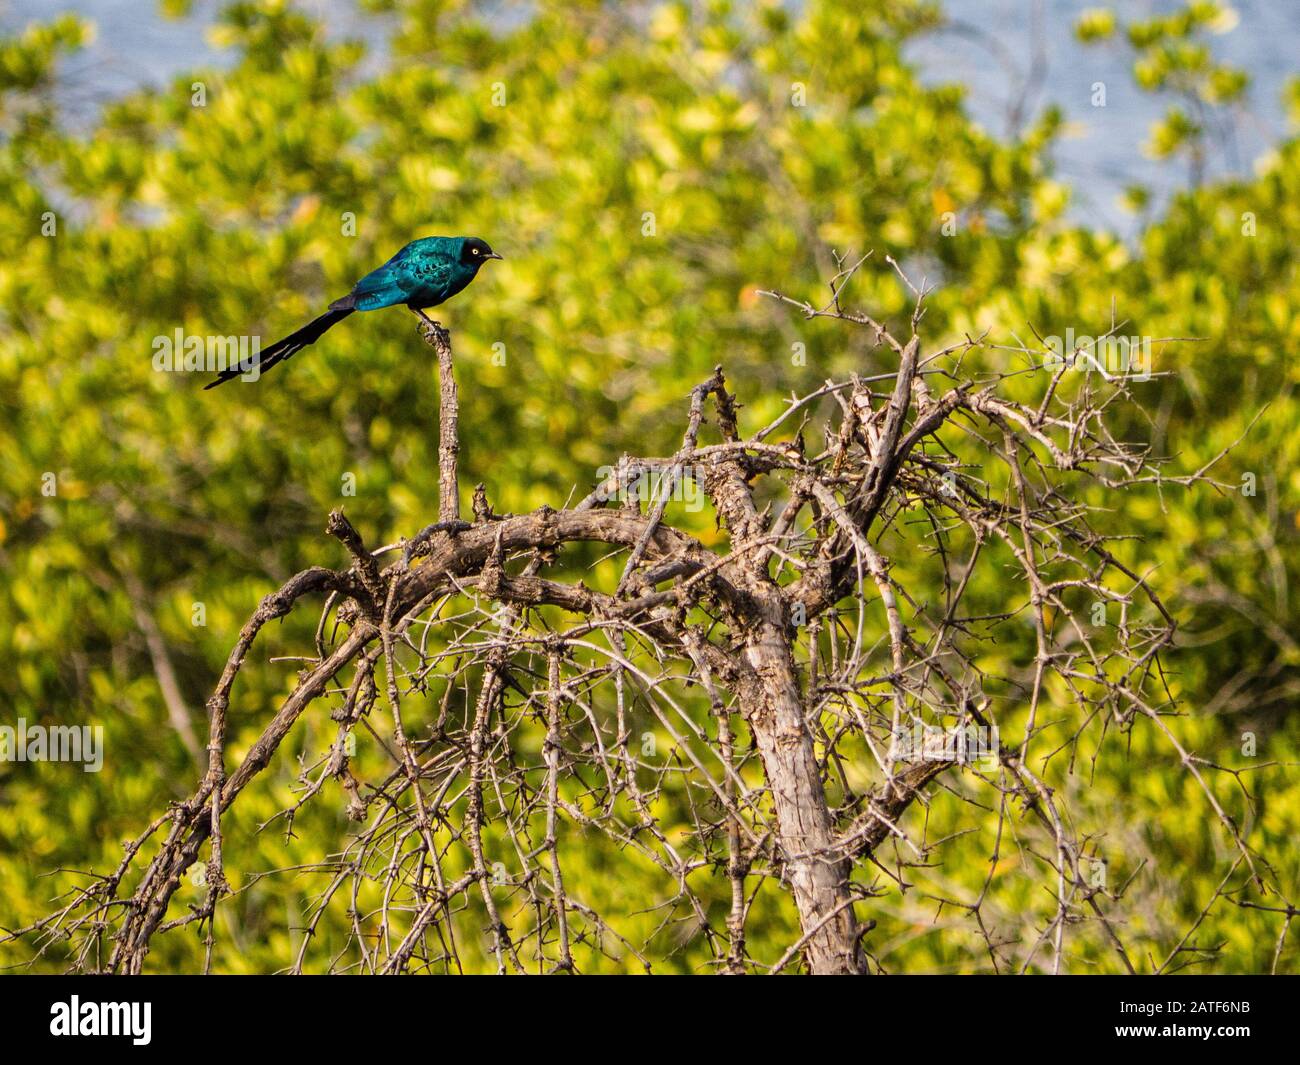 Tropical bird in a tree Stock Photo